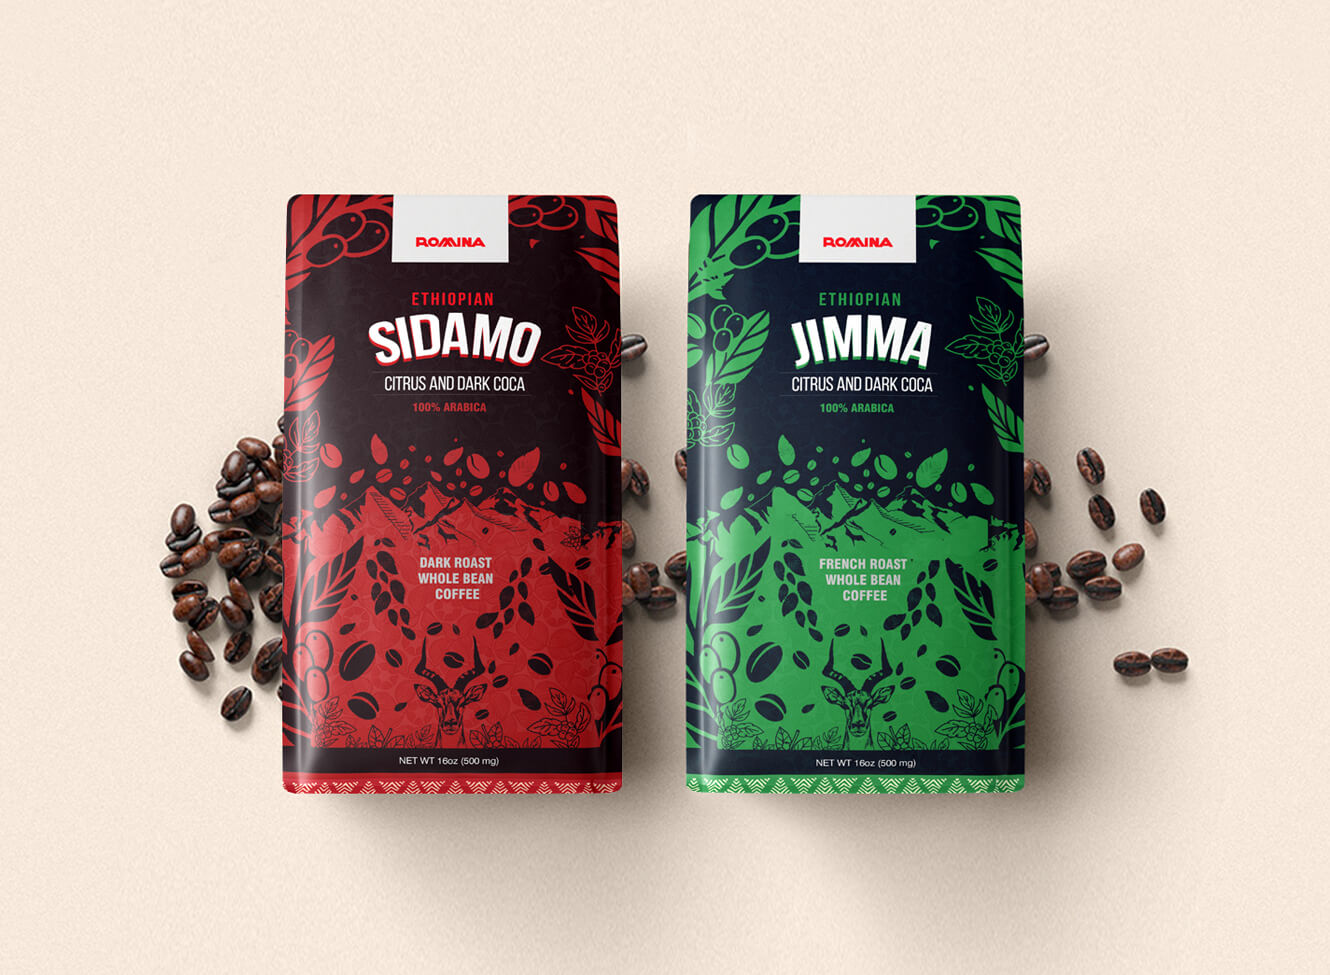 Romina coffee exporting